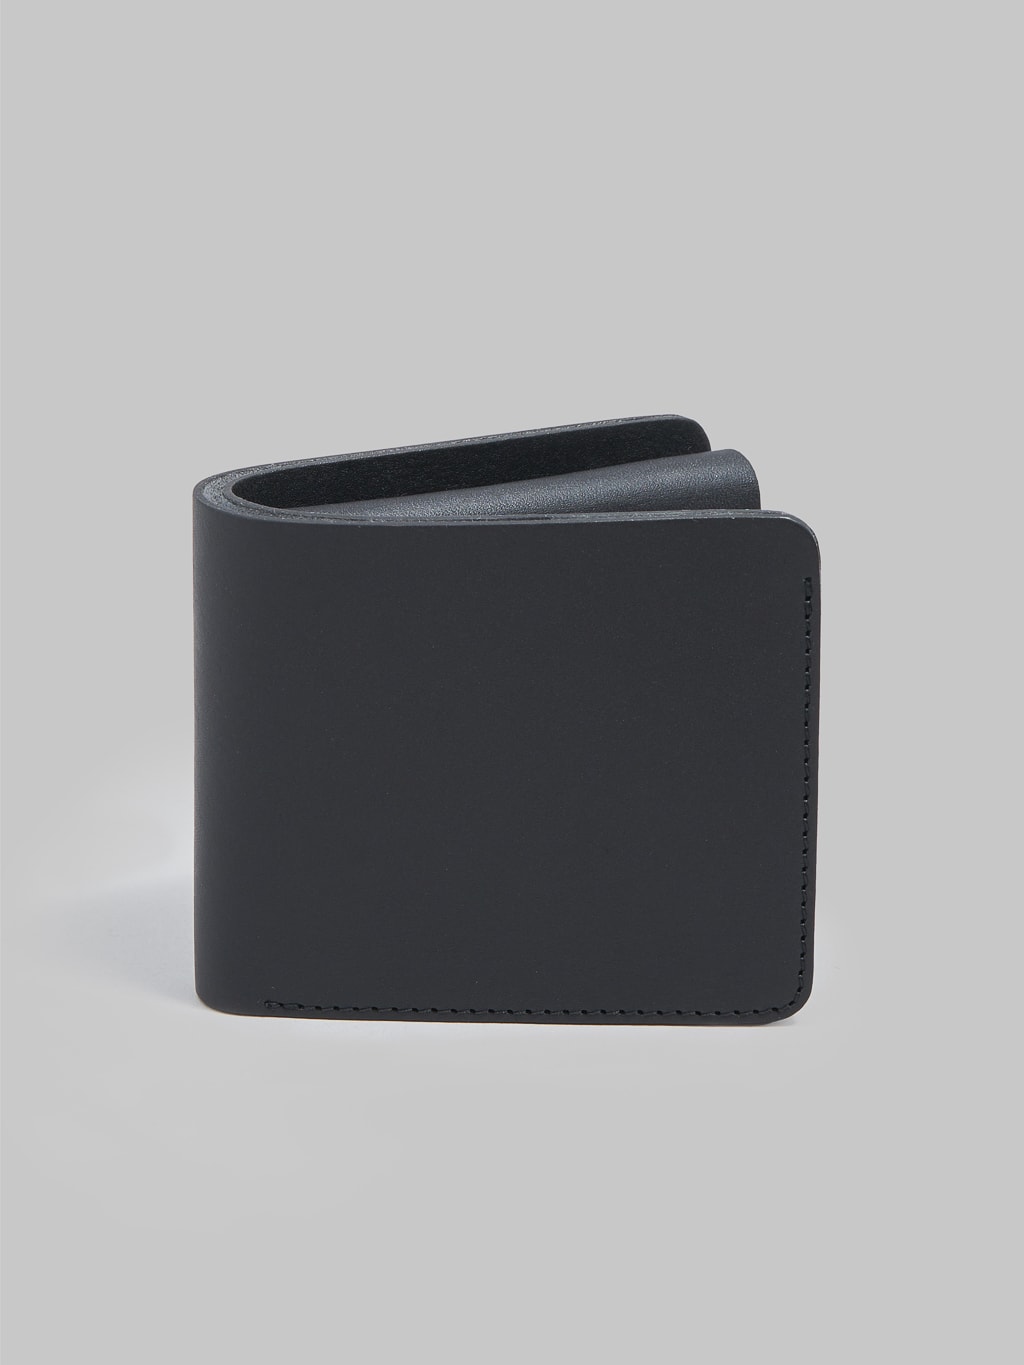 Kobashi Studio premium Leather Fold Wallet Black side look